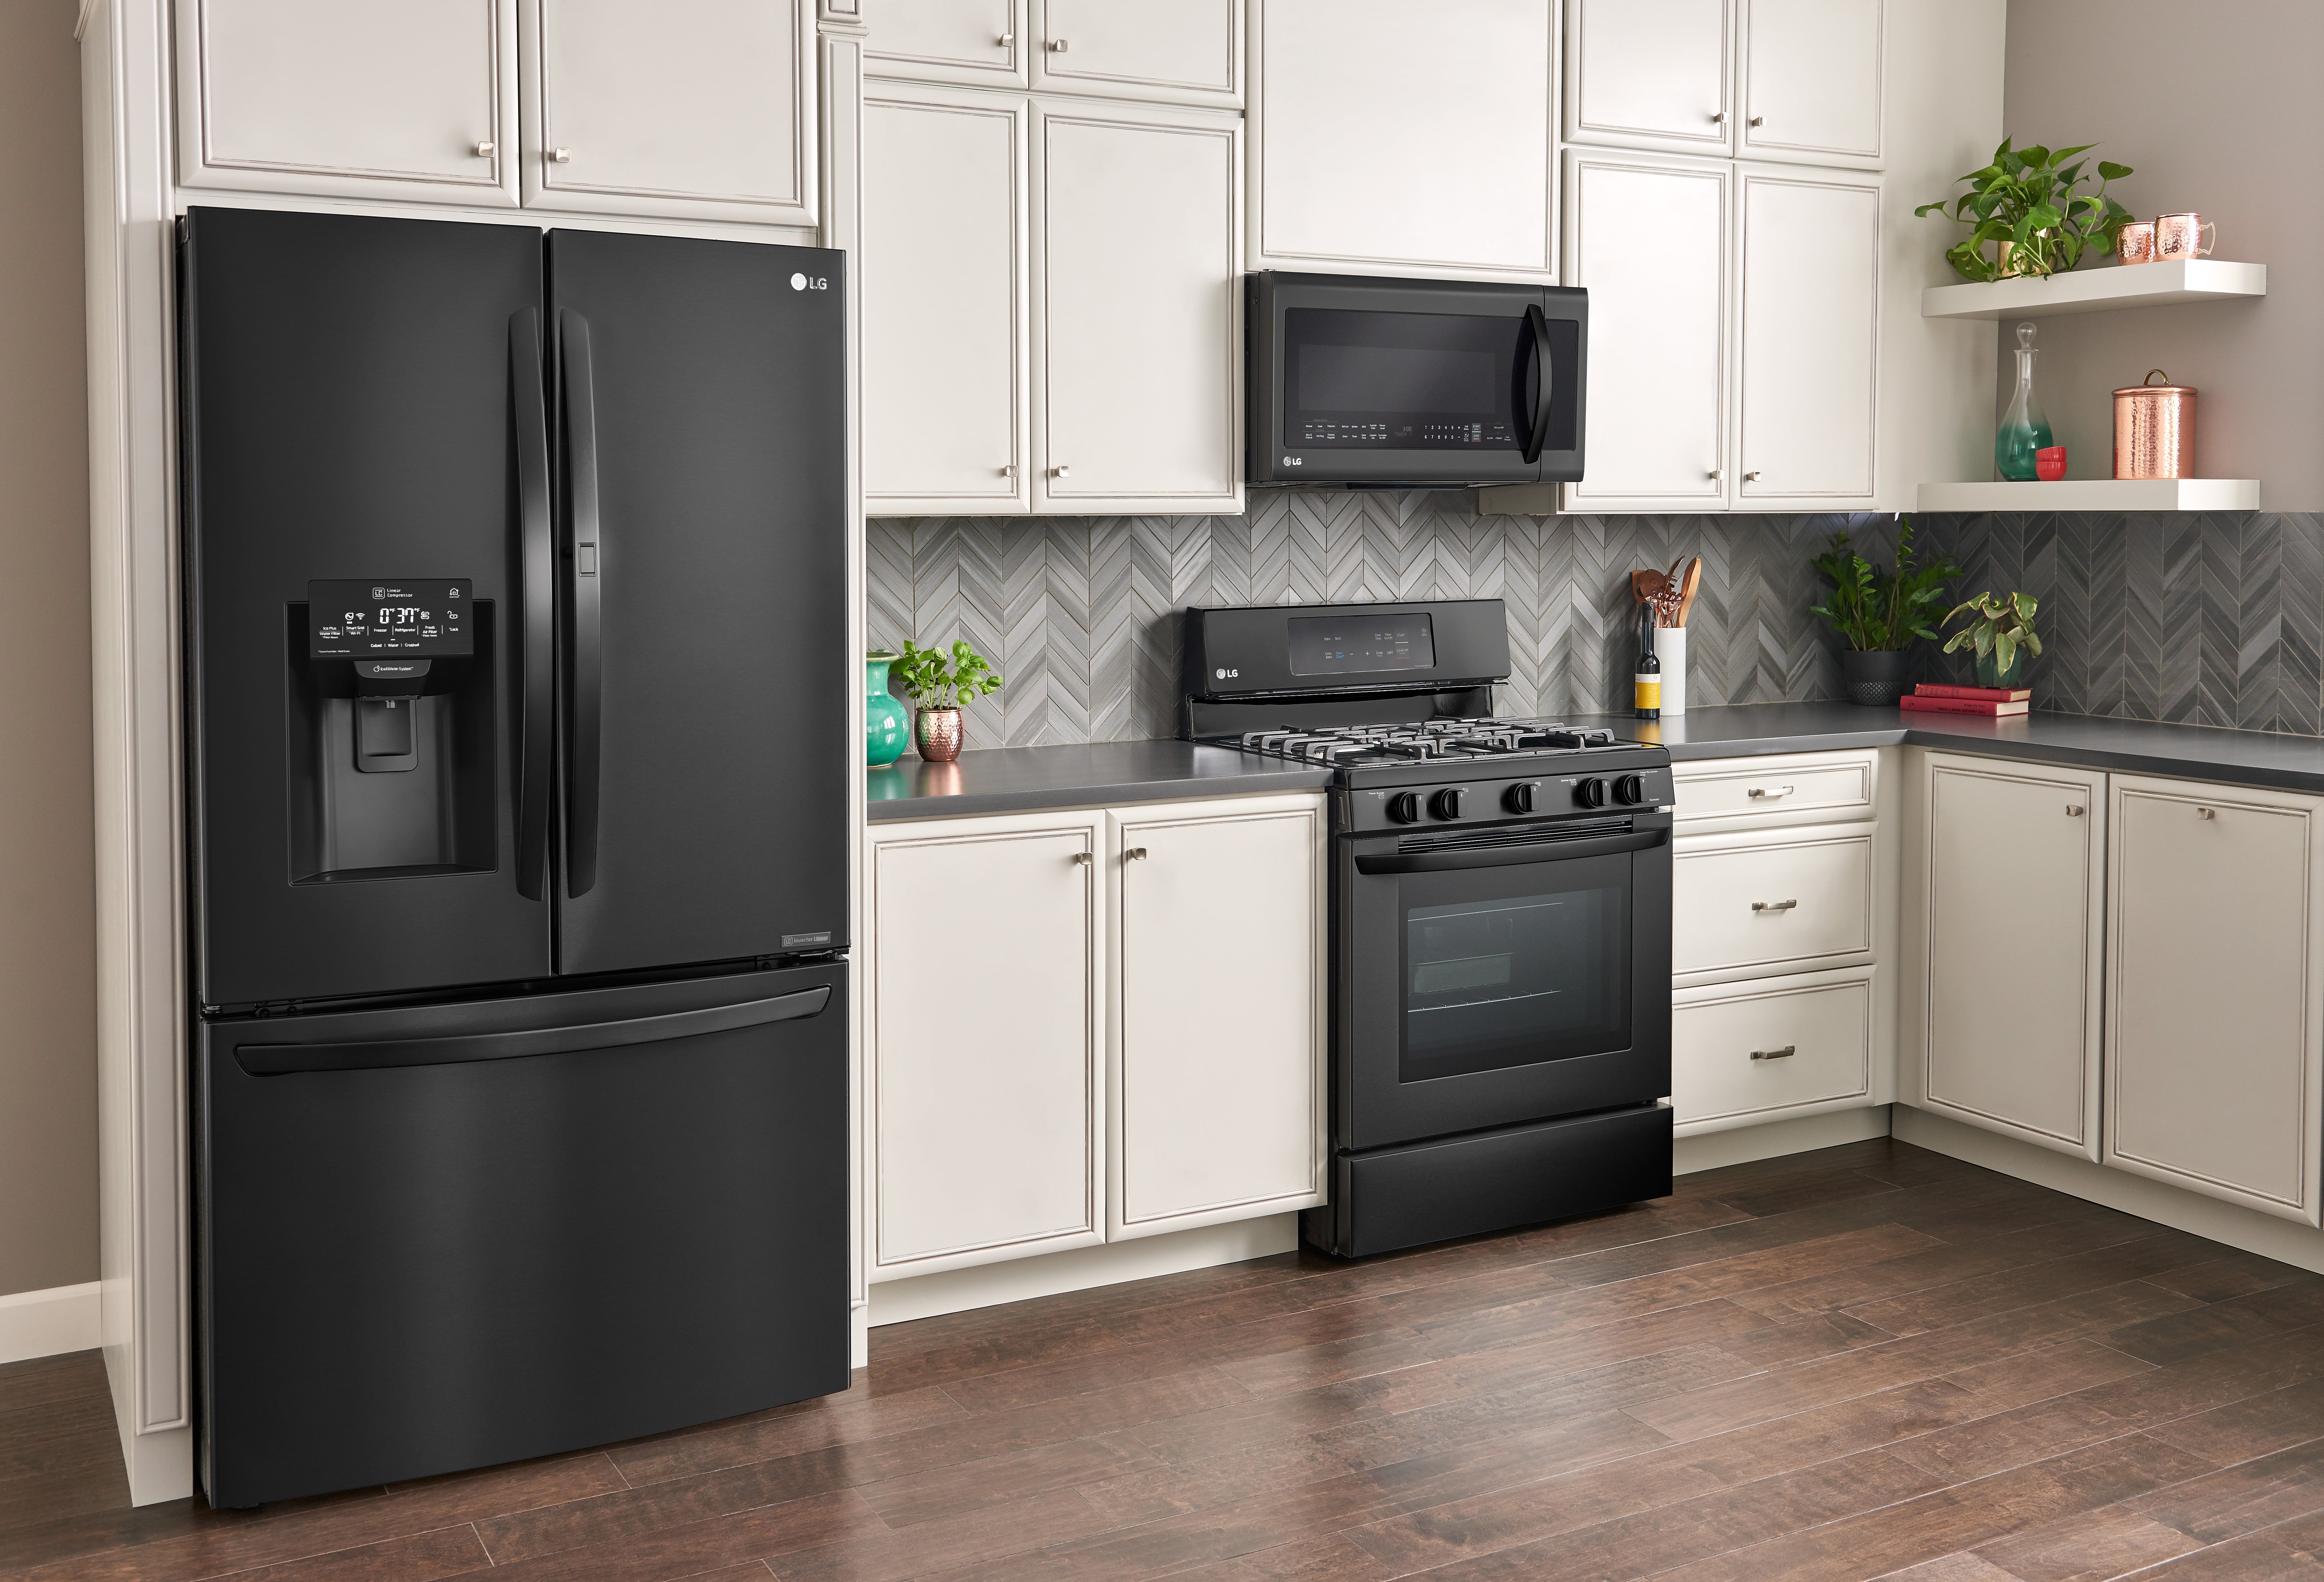 black versus stainless steel appliances